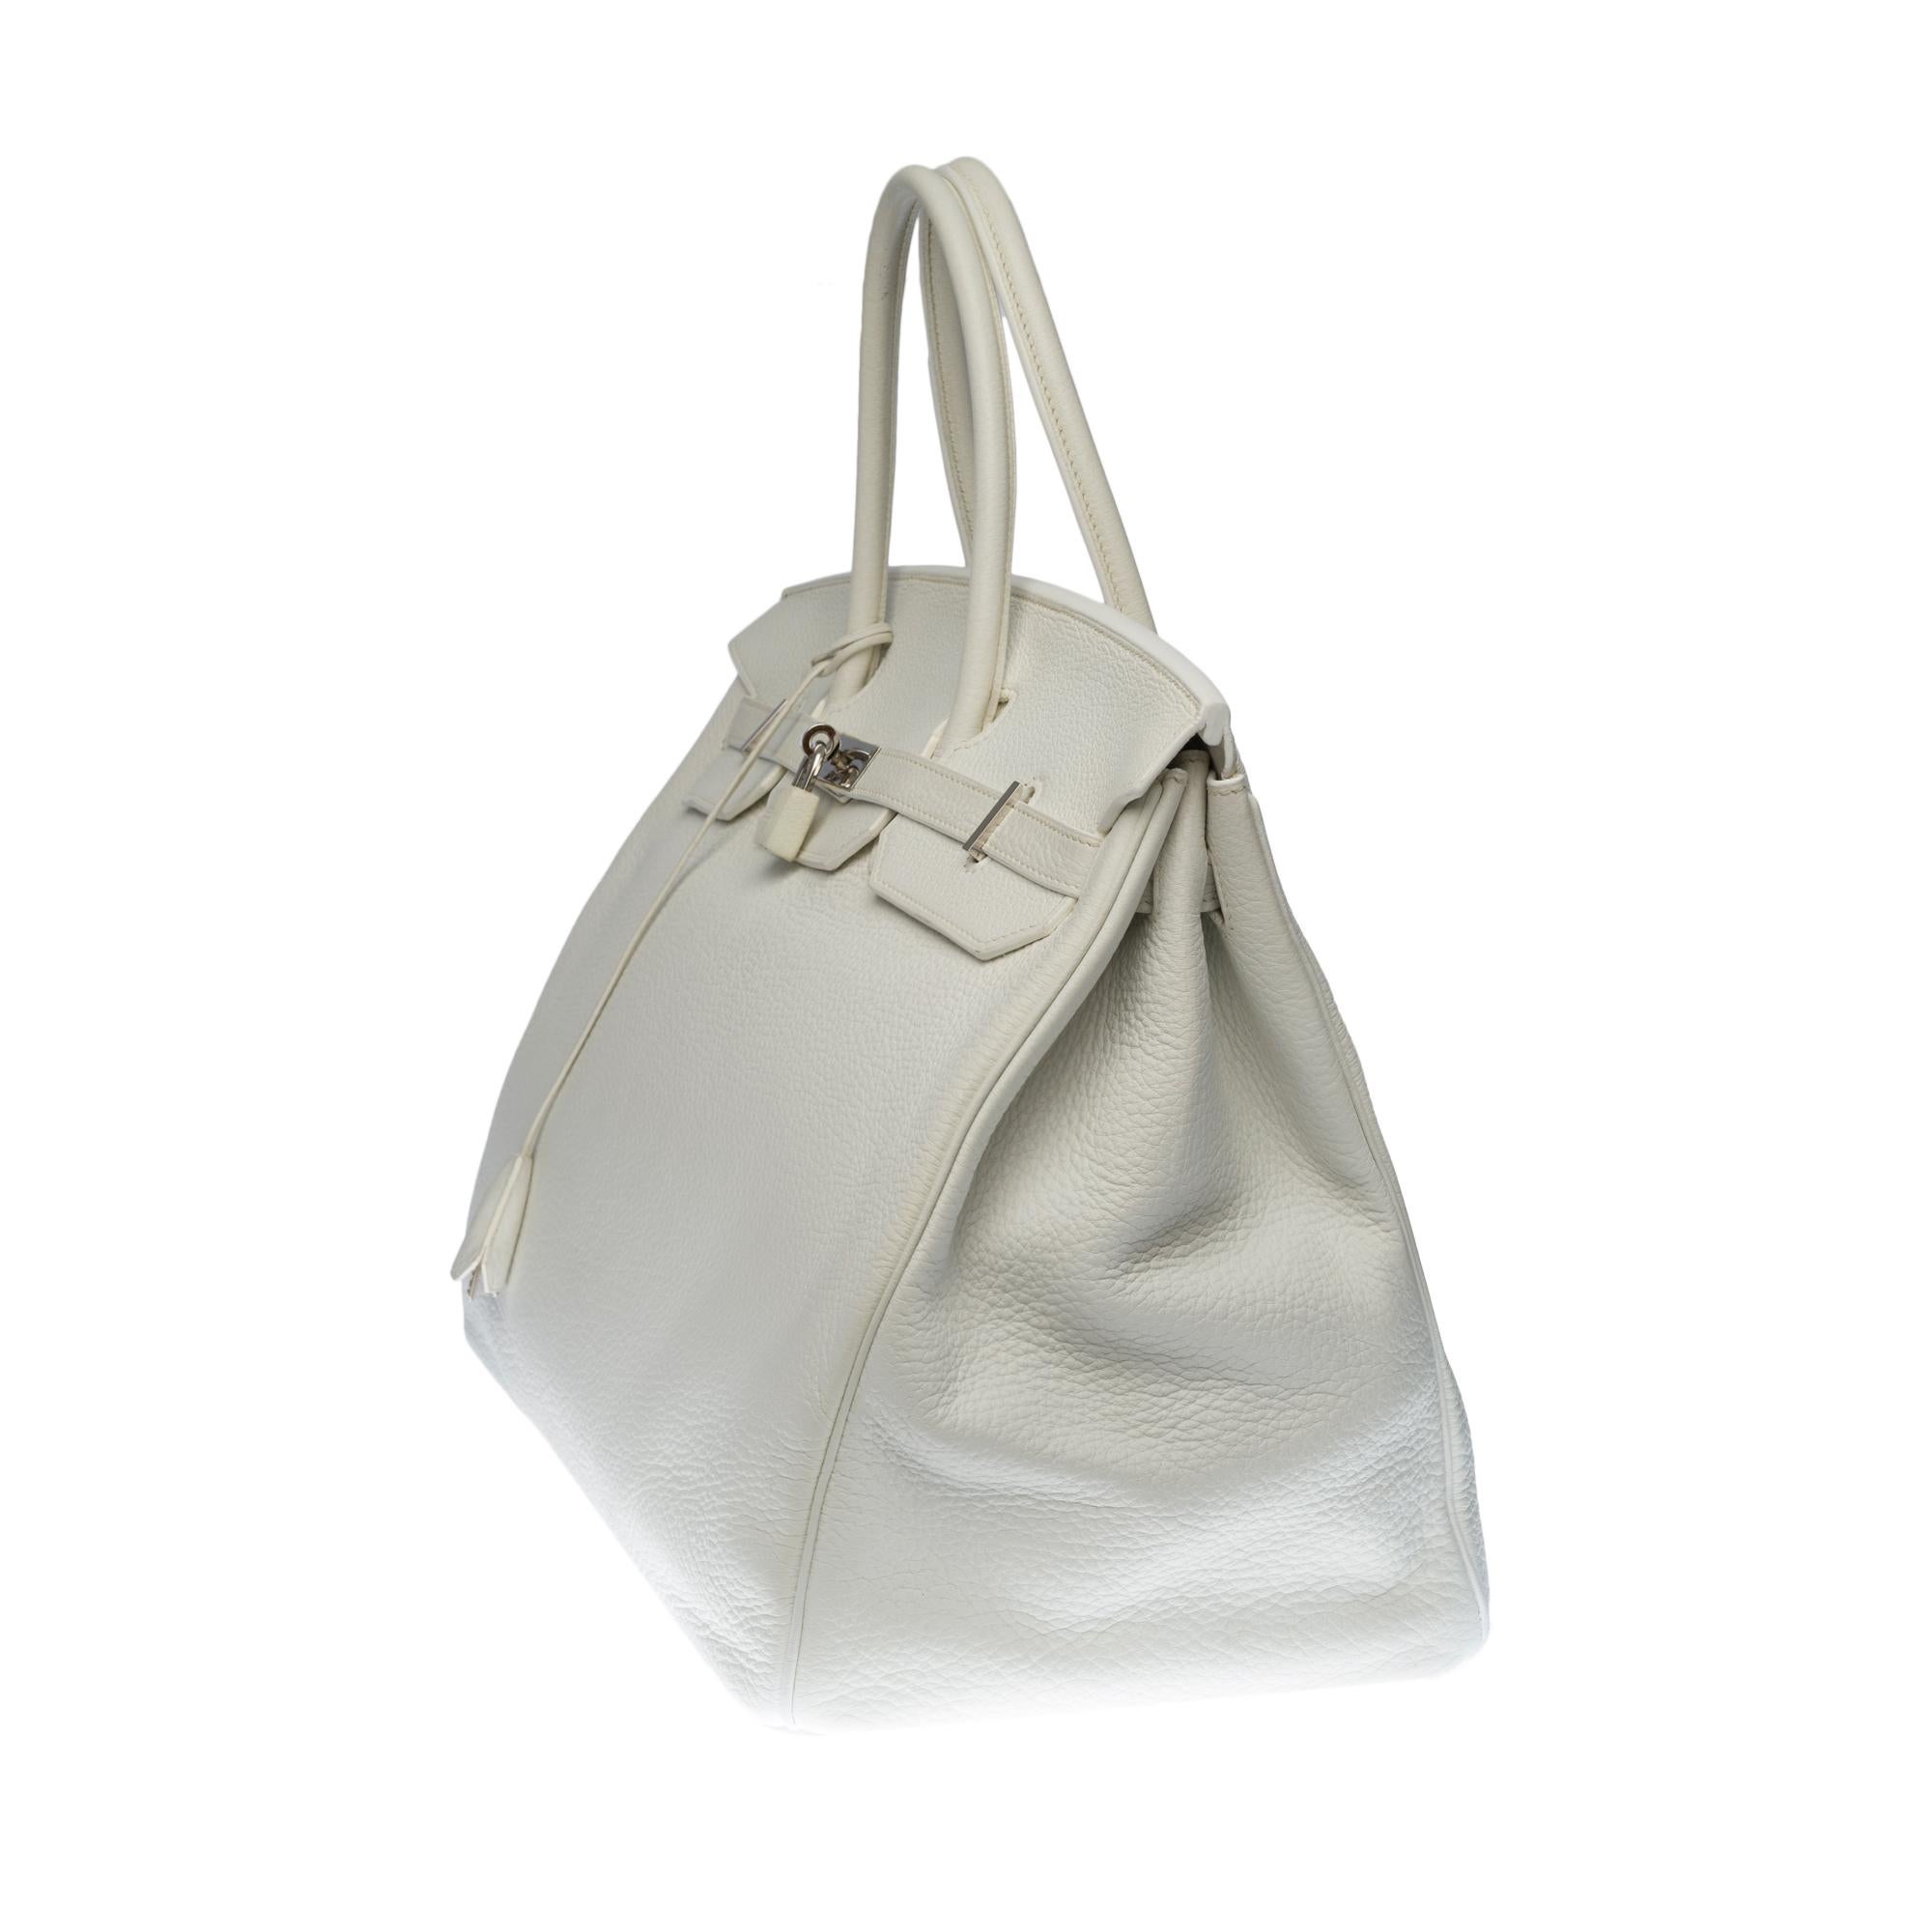 Gray Stunning Hermes Birkin 40cm handbag in White Togo leather, SHW